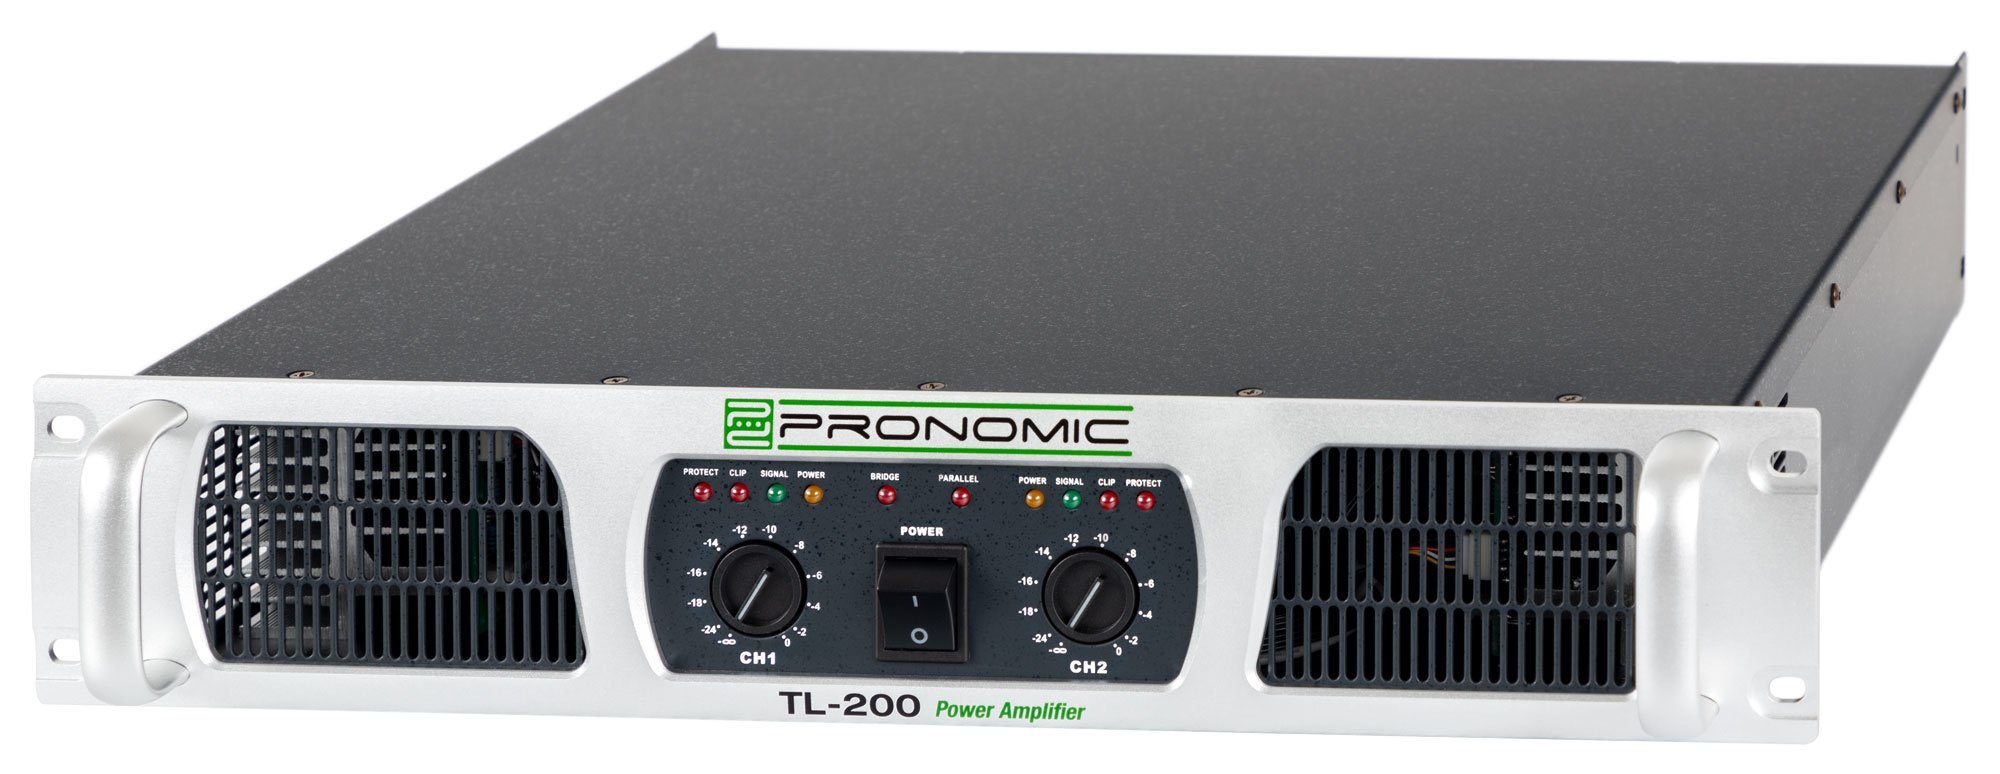 Pronomic TL-200 Endstufe Verstärker (Anzahl Kanäle: 2 Kanal Колонки- Schraubklemmen, 1000 W, Stereo-Leistungsverstärker mit 2x 500 Watt an 2 Ohm)